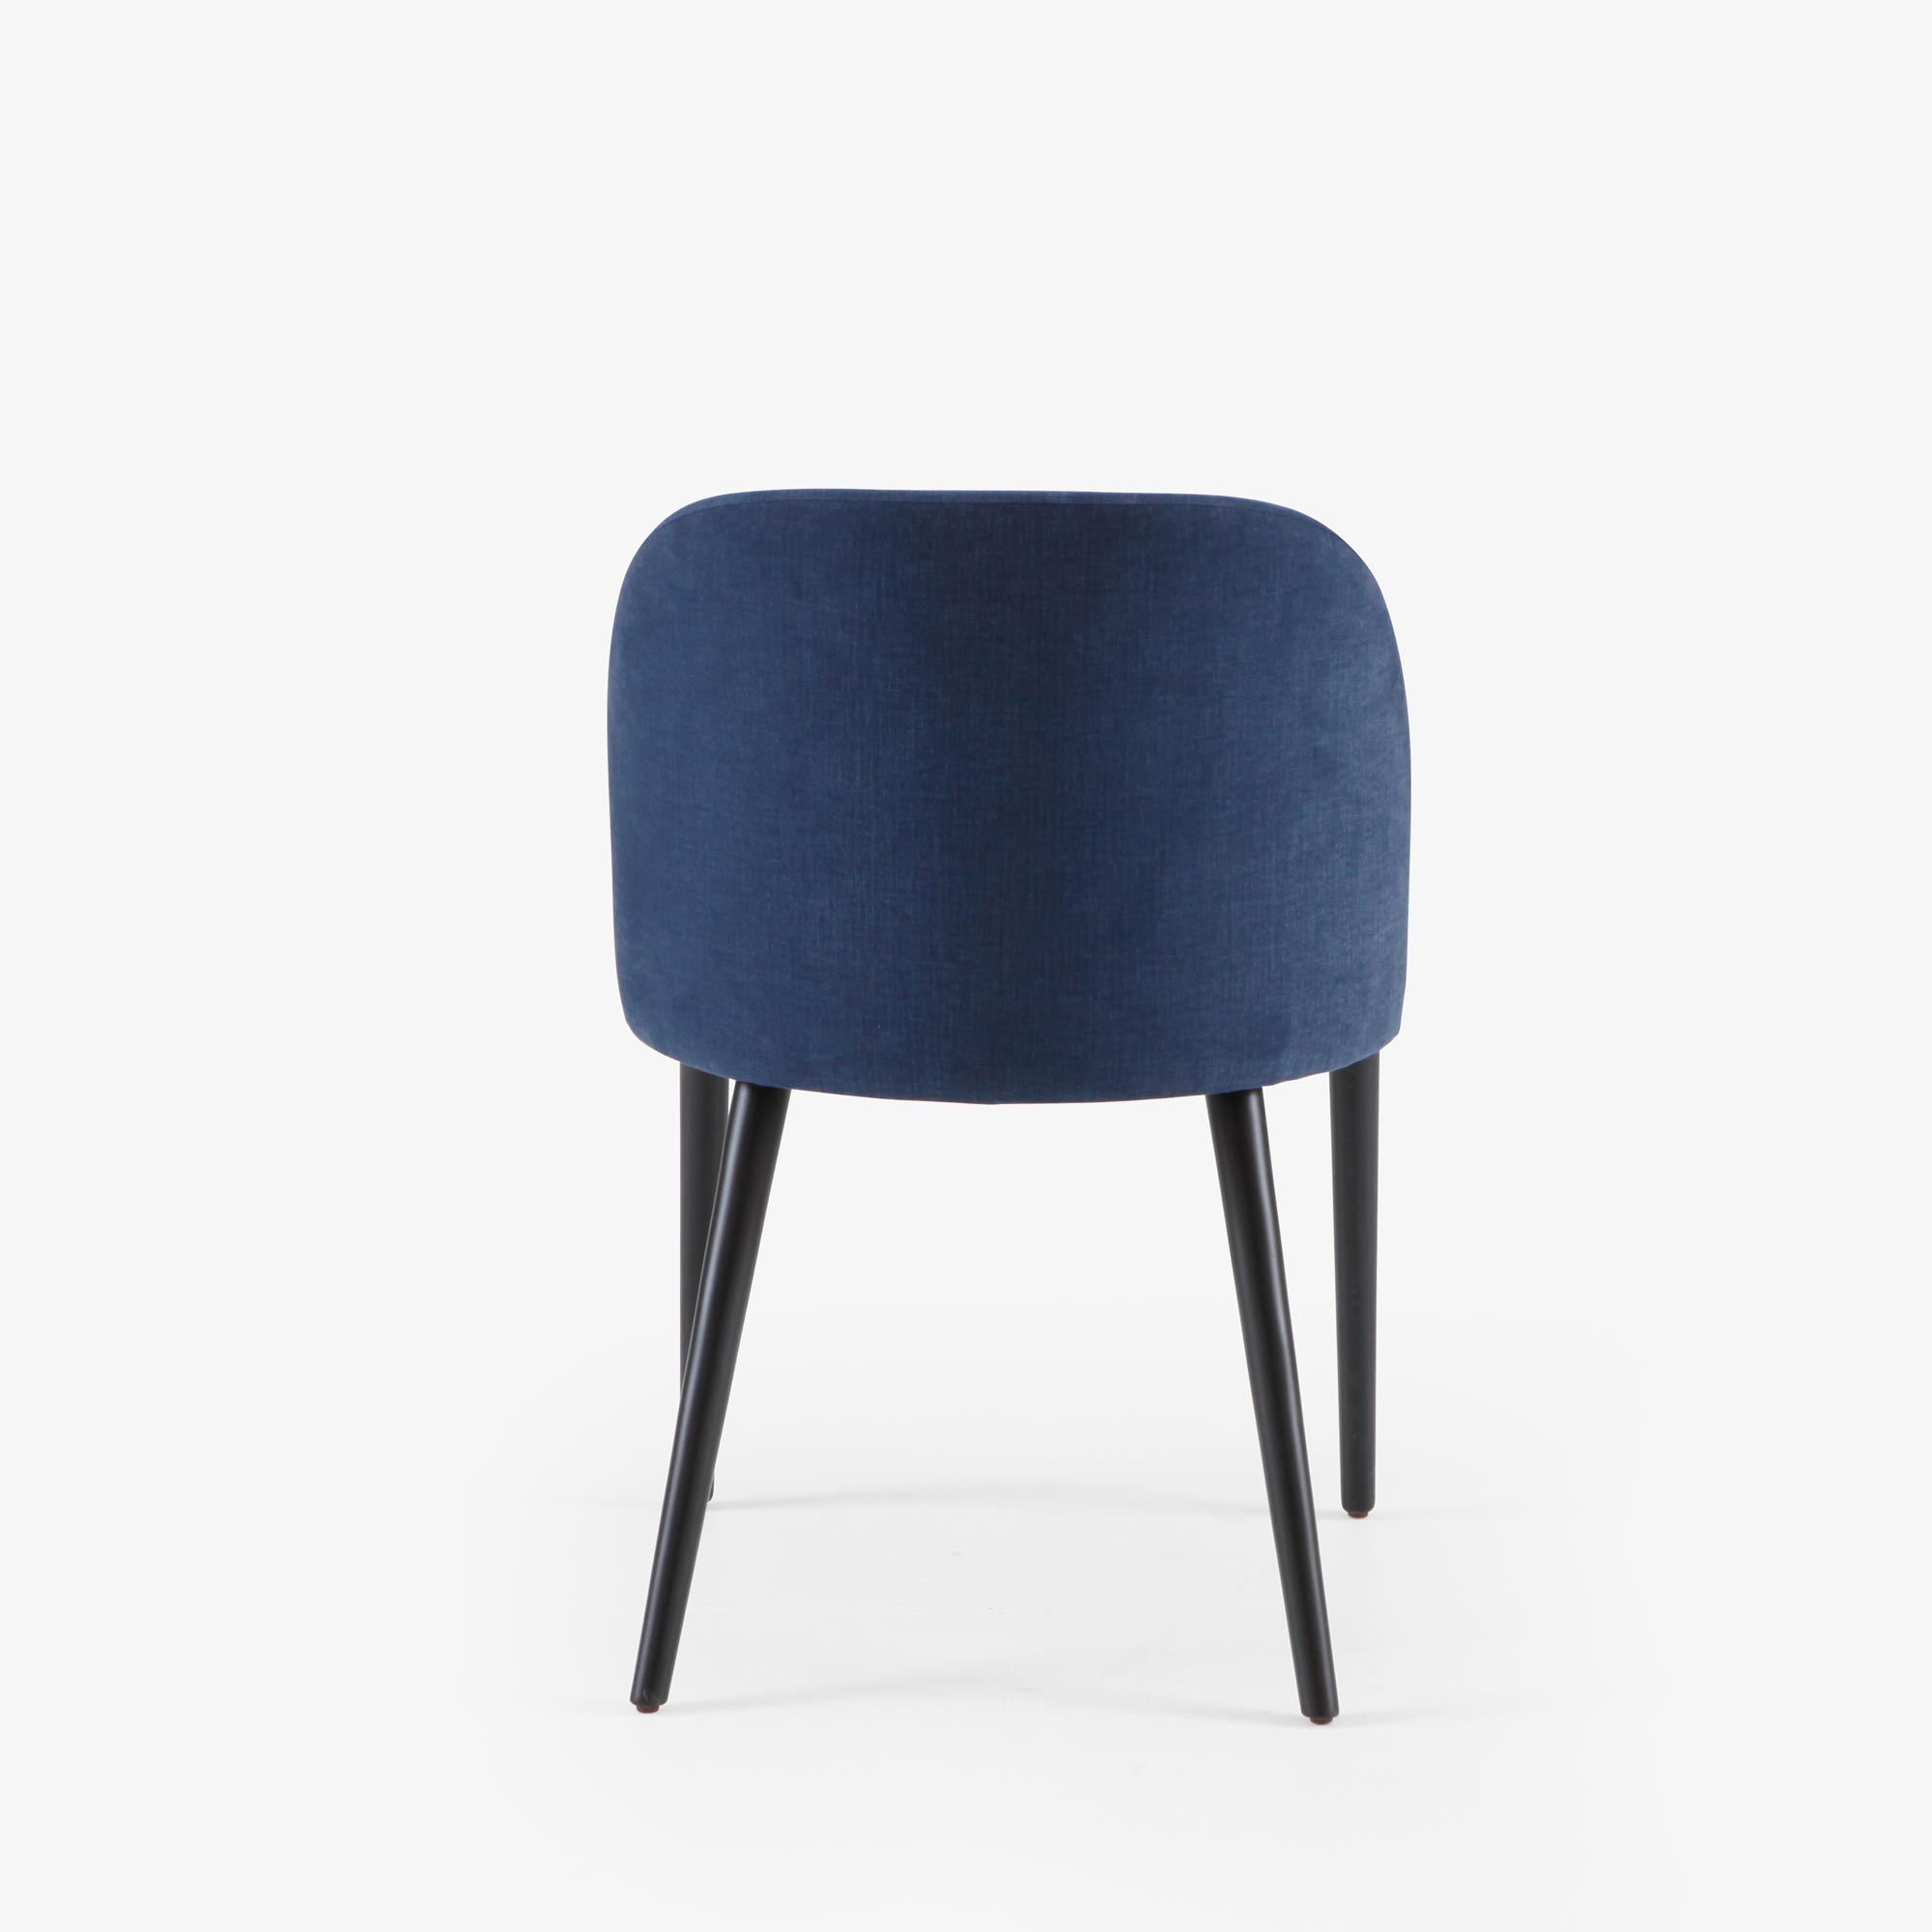 Image Chair fabric-bleu nuit (midnight blue)  5